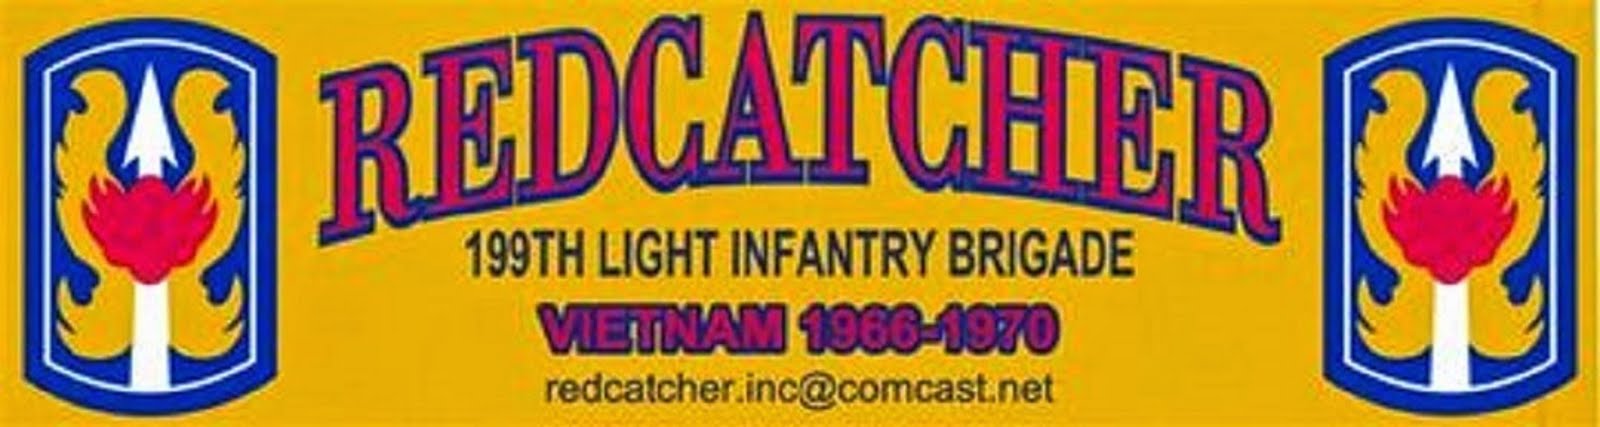 REDCATCHER 199th INFANTRY BRIGADE VIETNAM 1966 -1970 ASSOCIATION